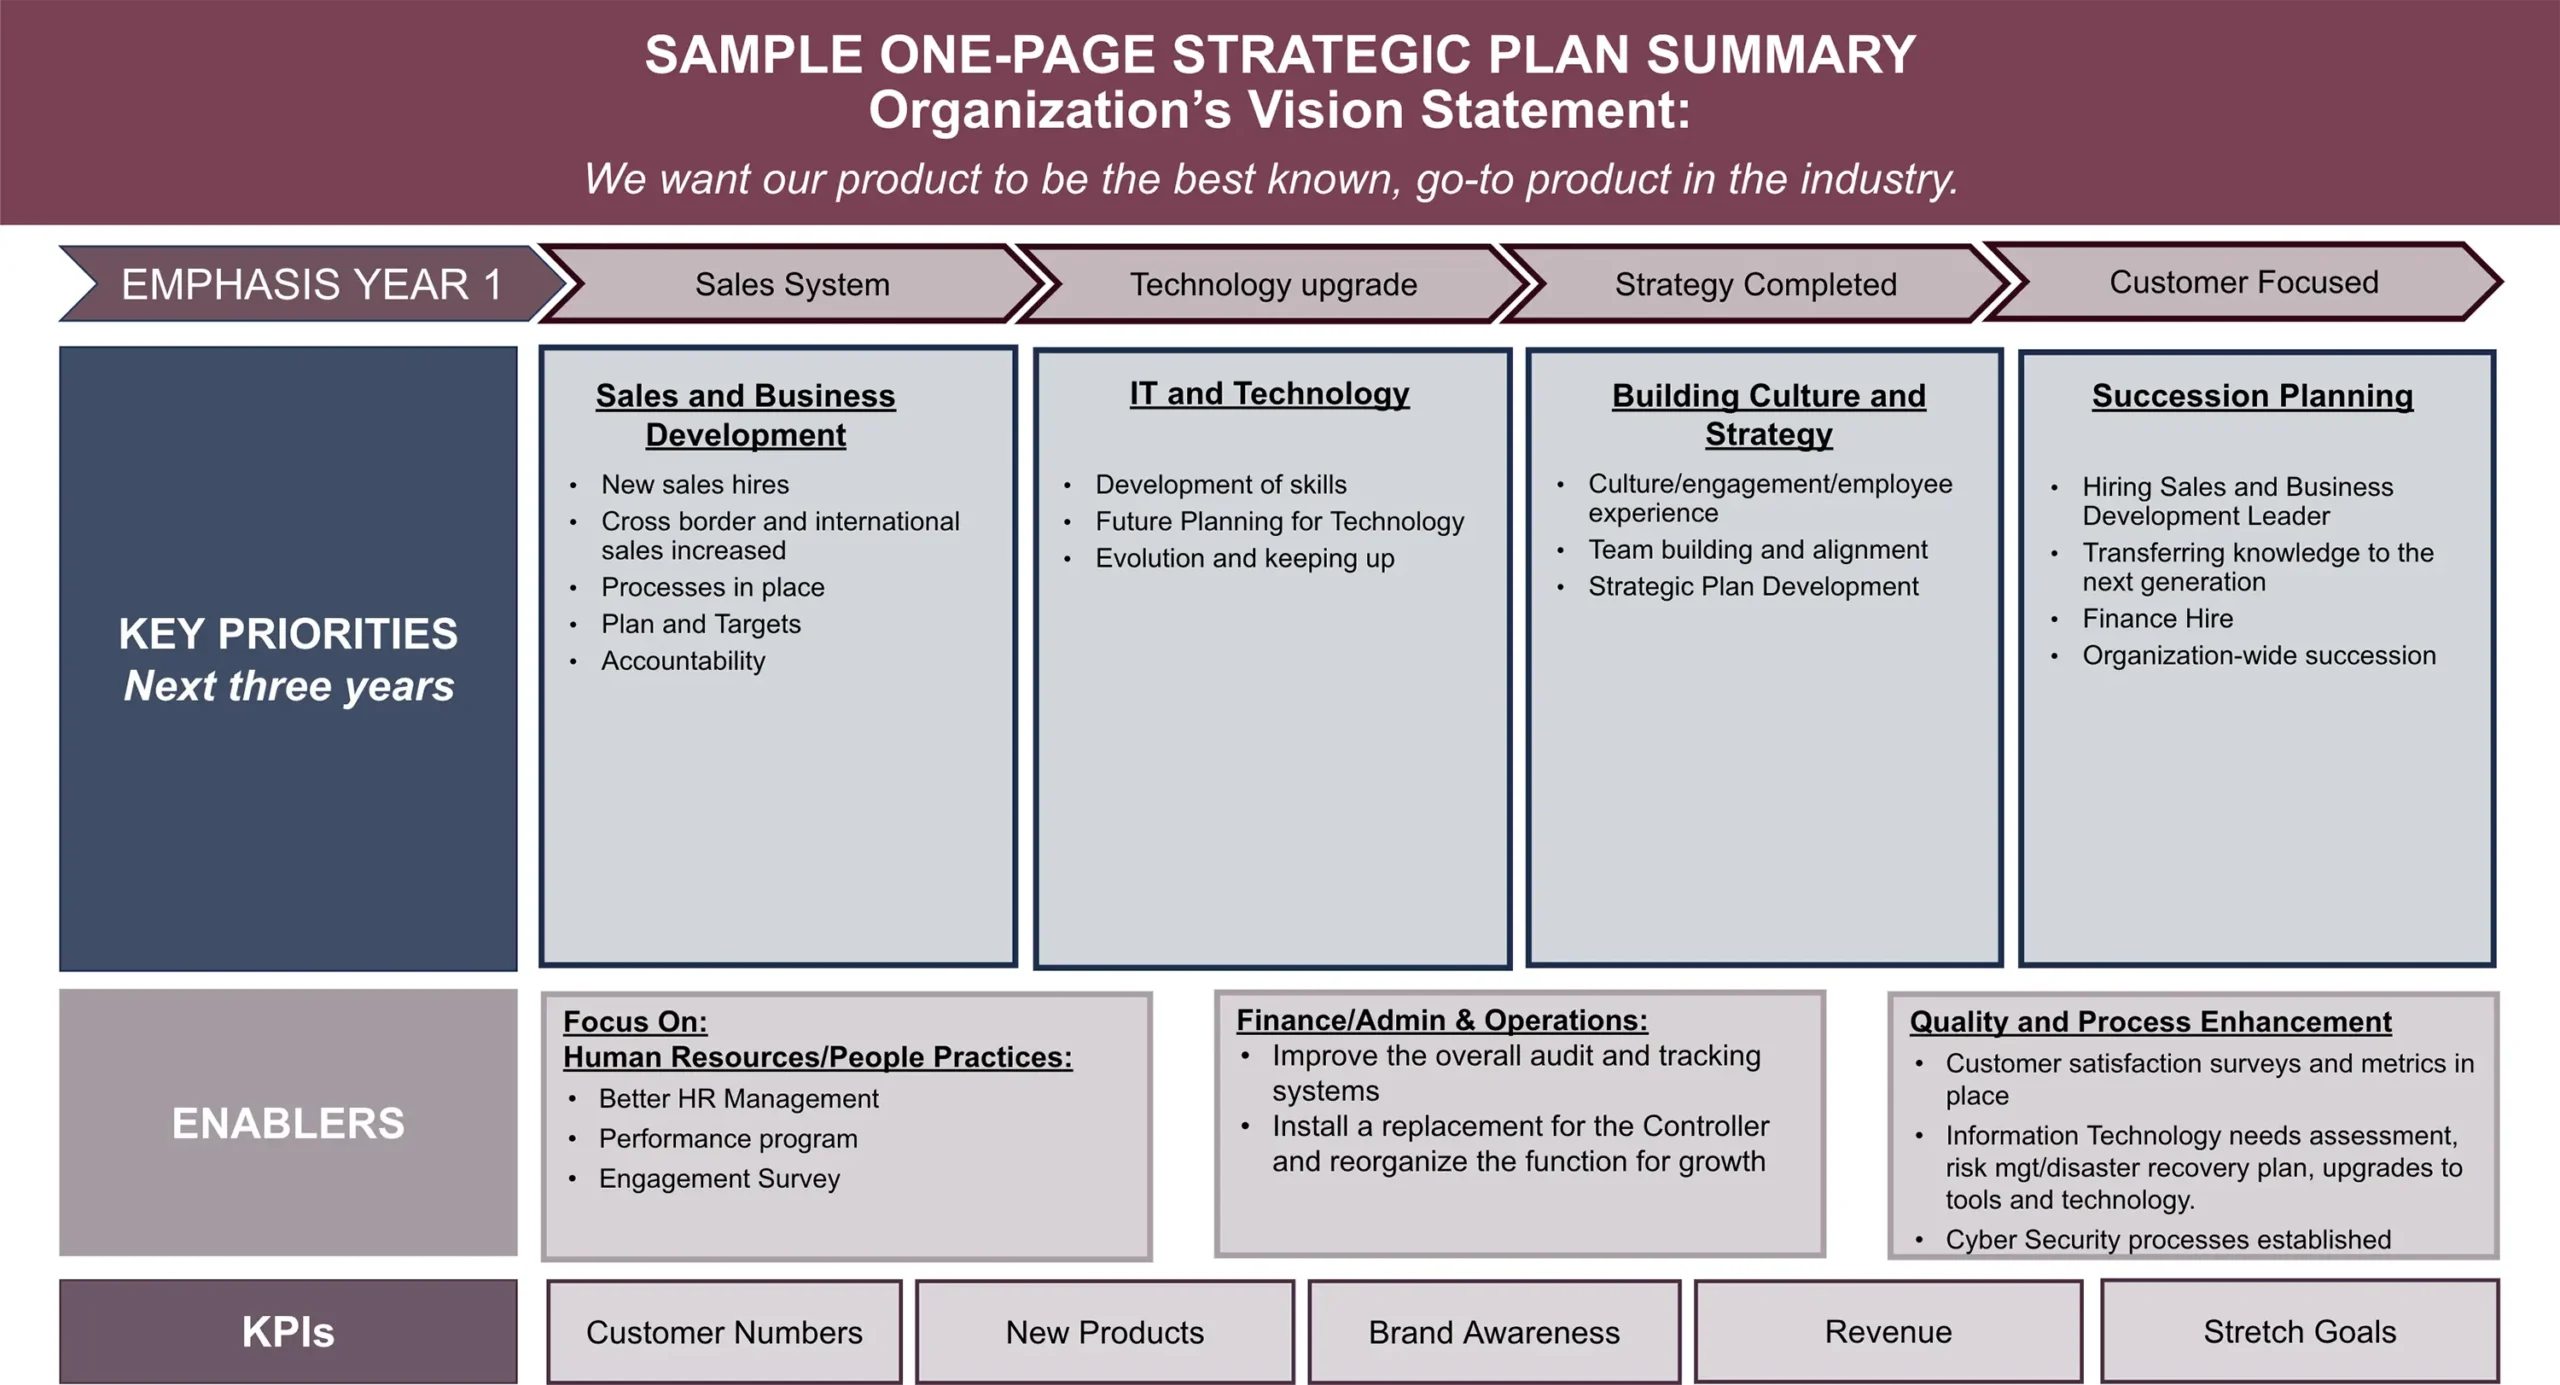 Sample One-Page Strategic Plan Summary